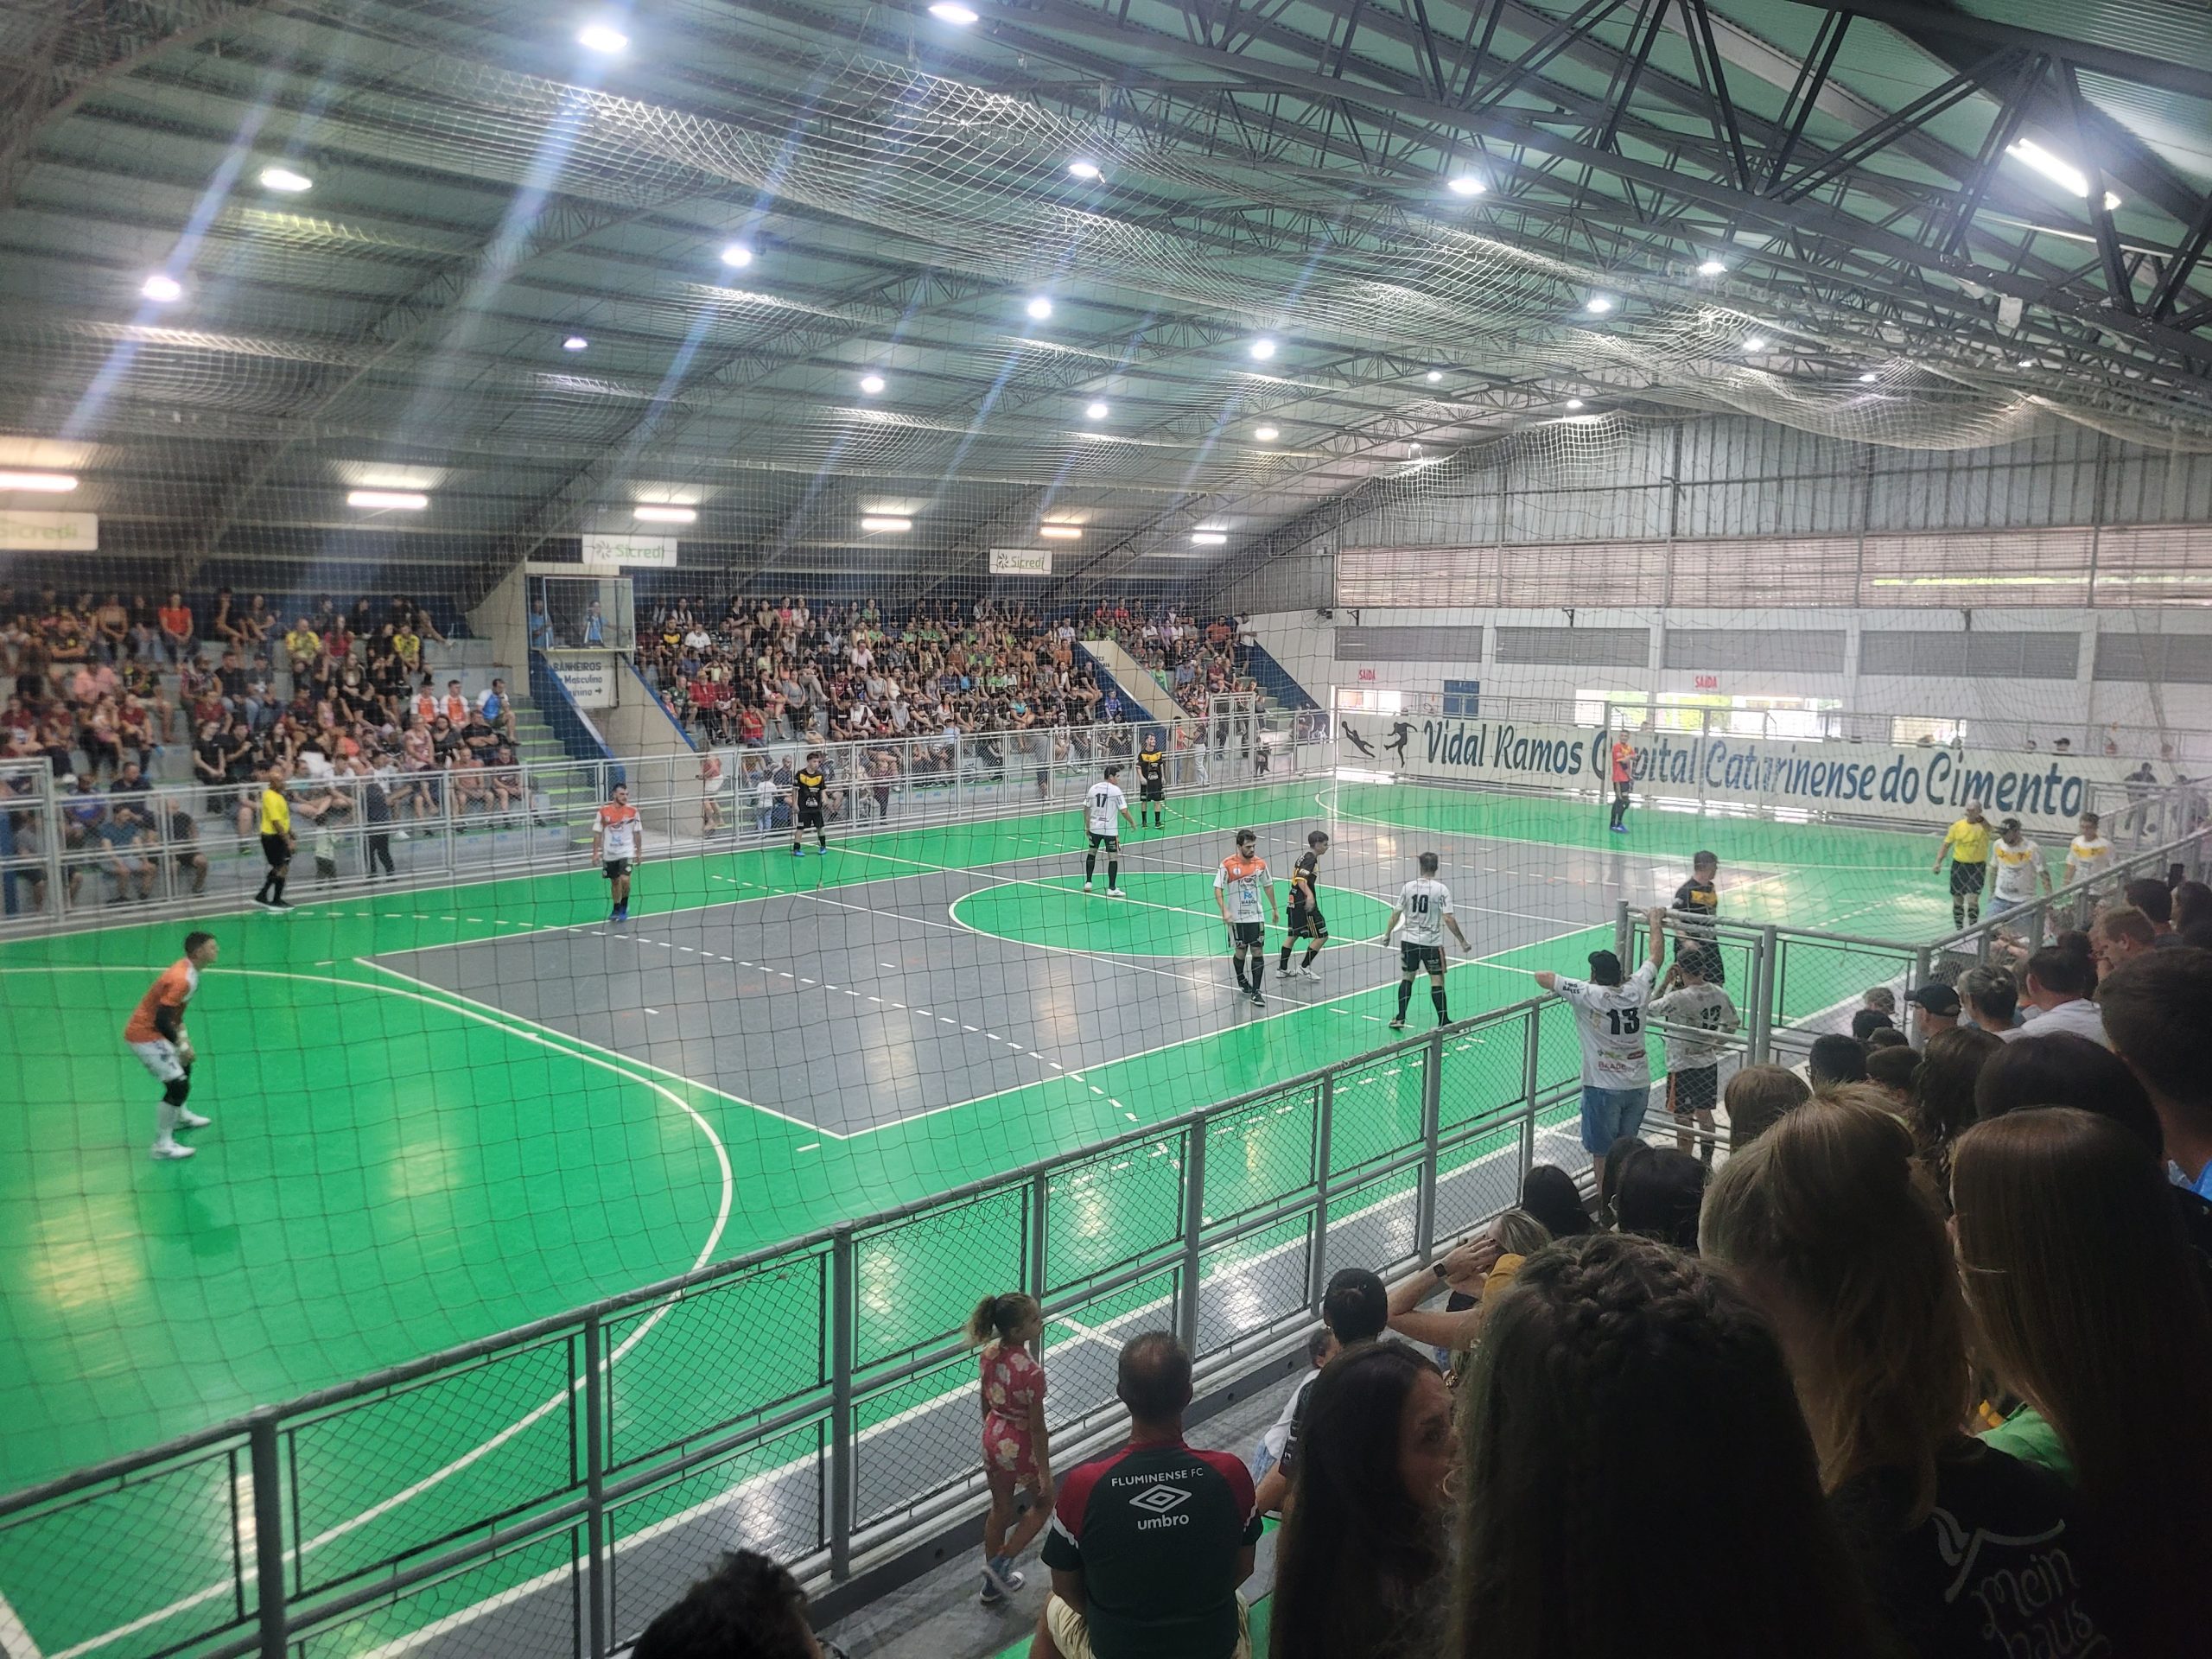 Acompanhe o XXVI Campeonato Municipal de Futsal